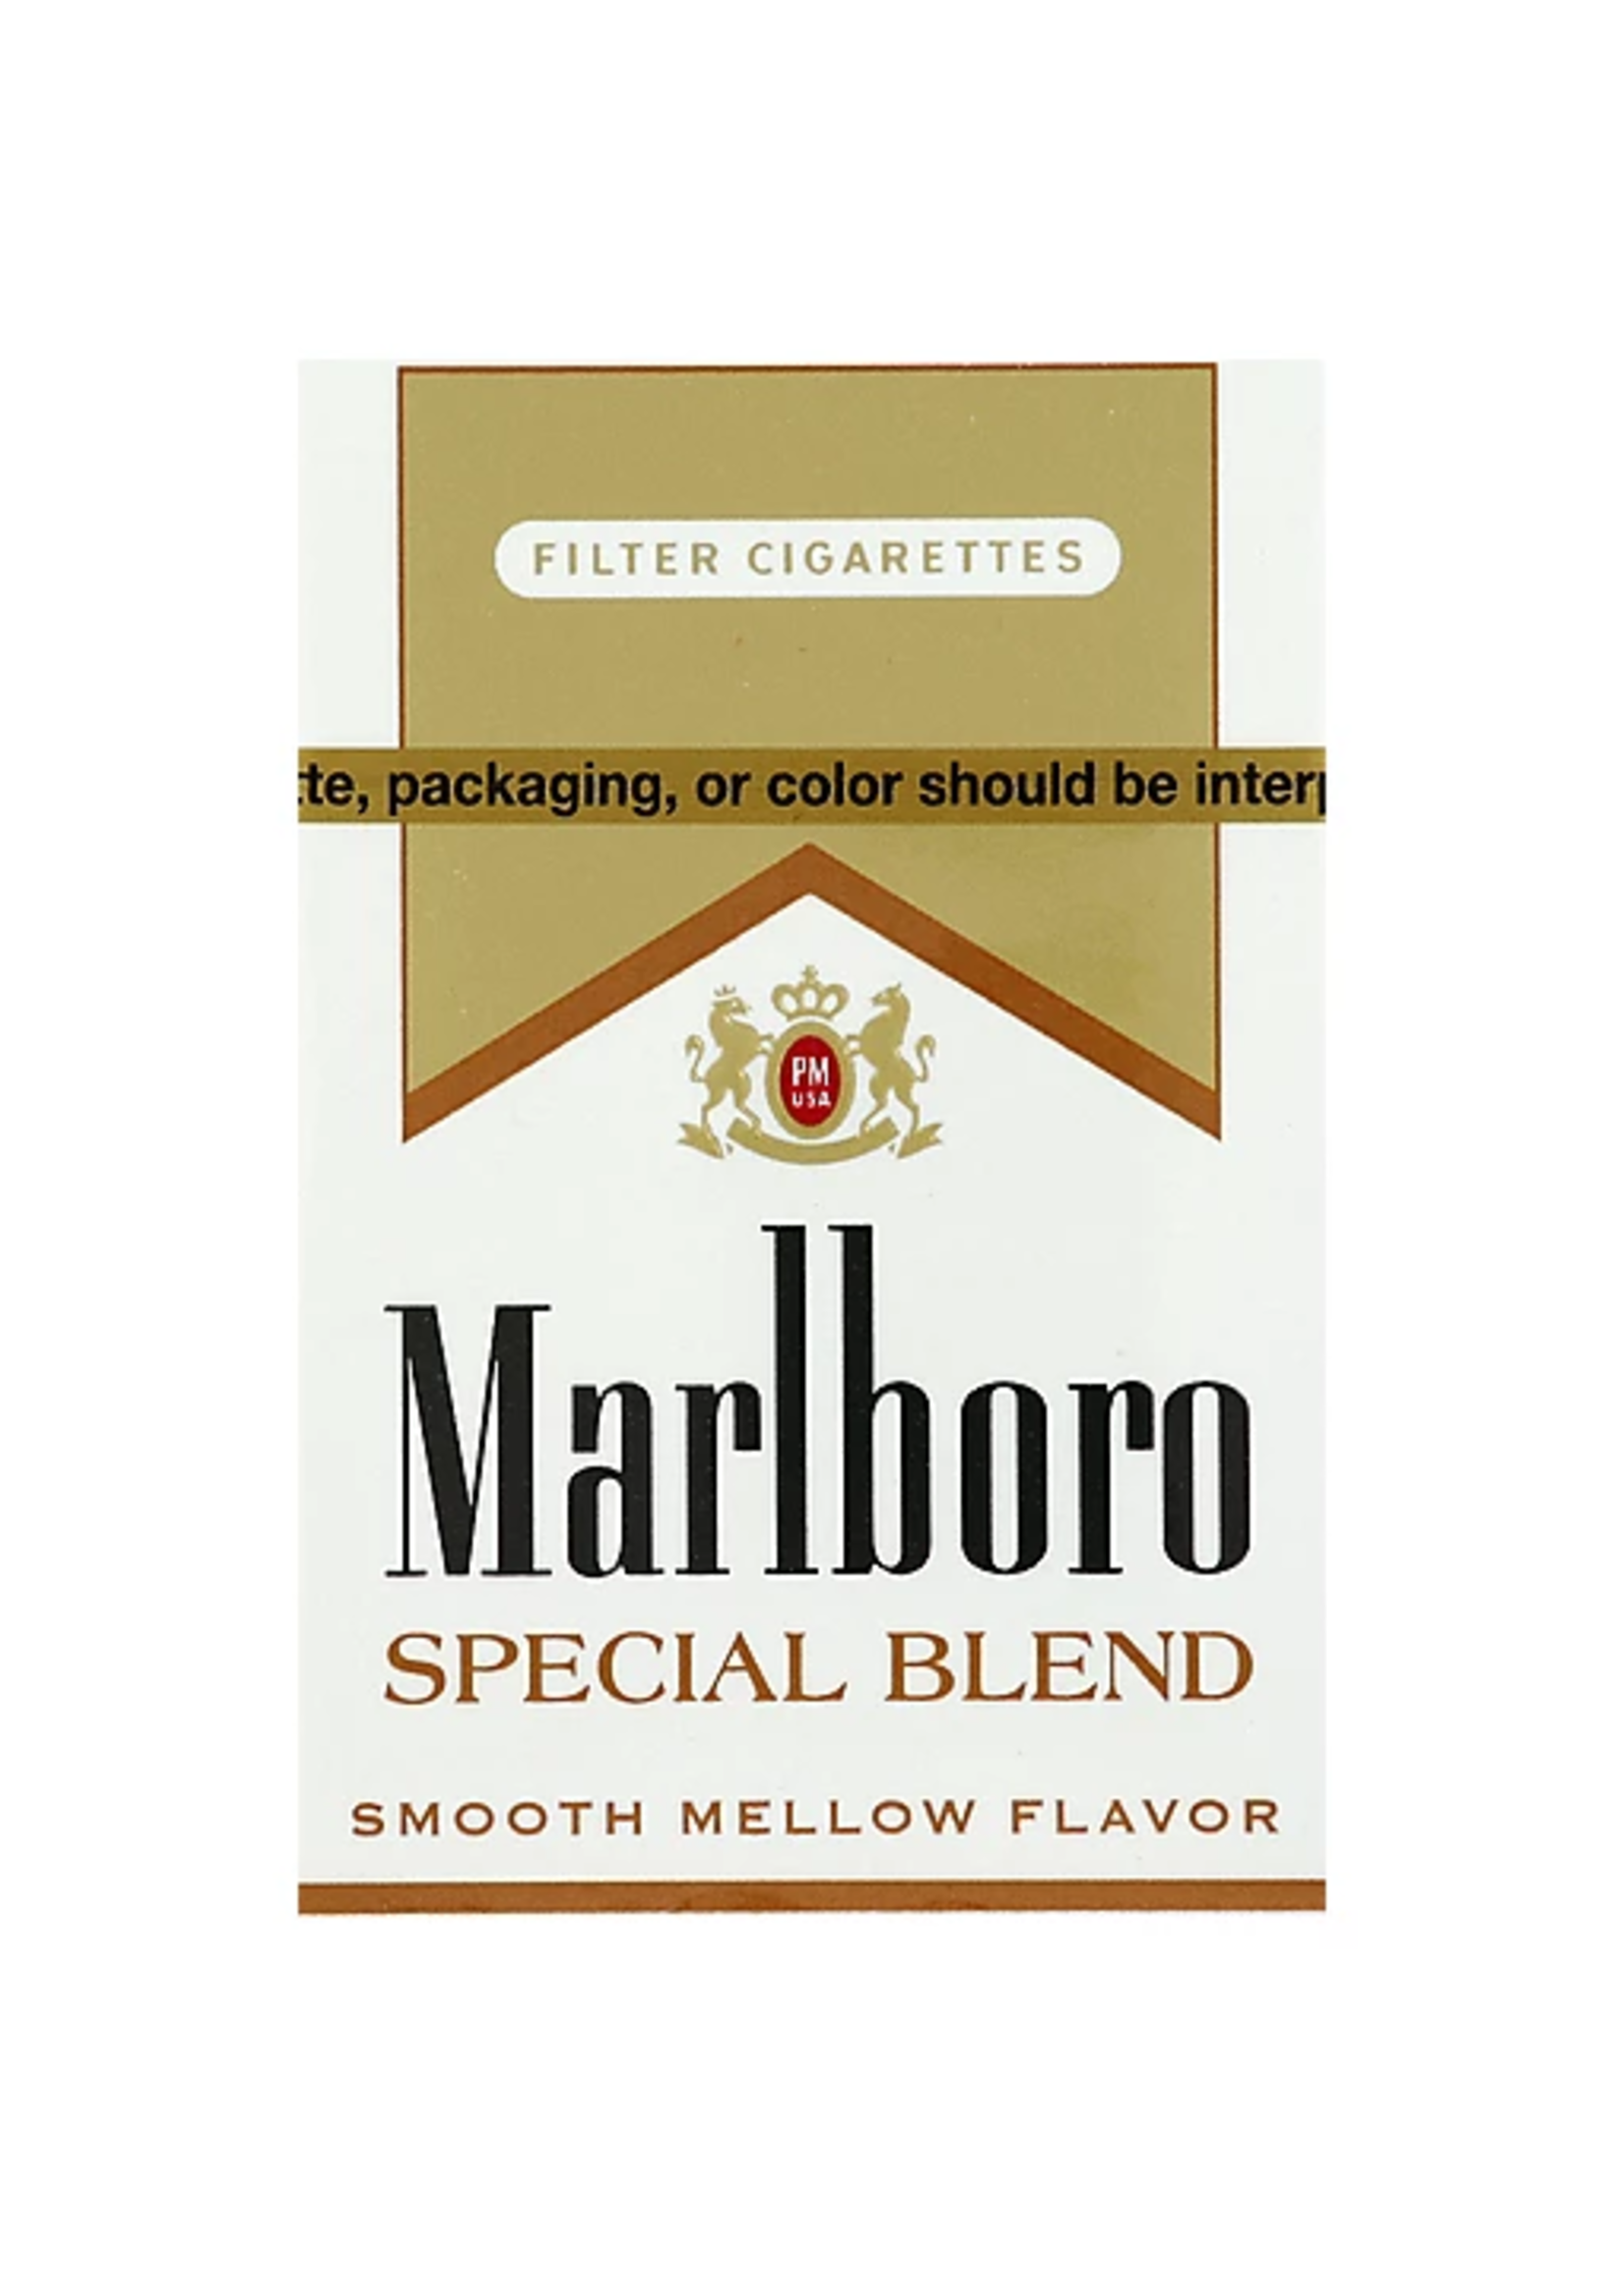 Marlboro Special Select Light Short Box